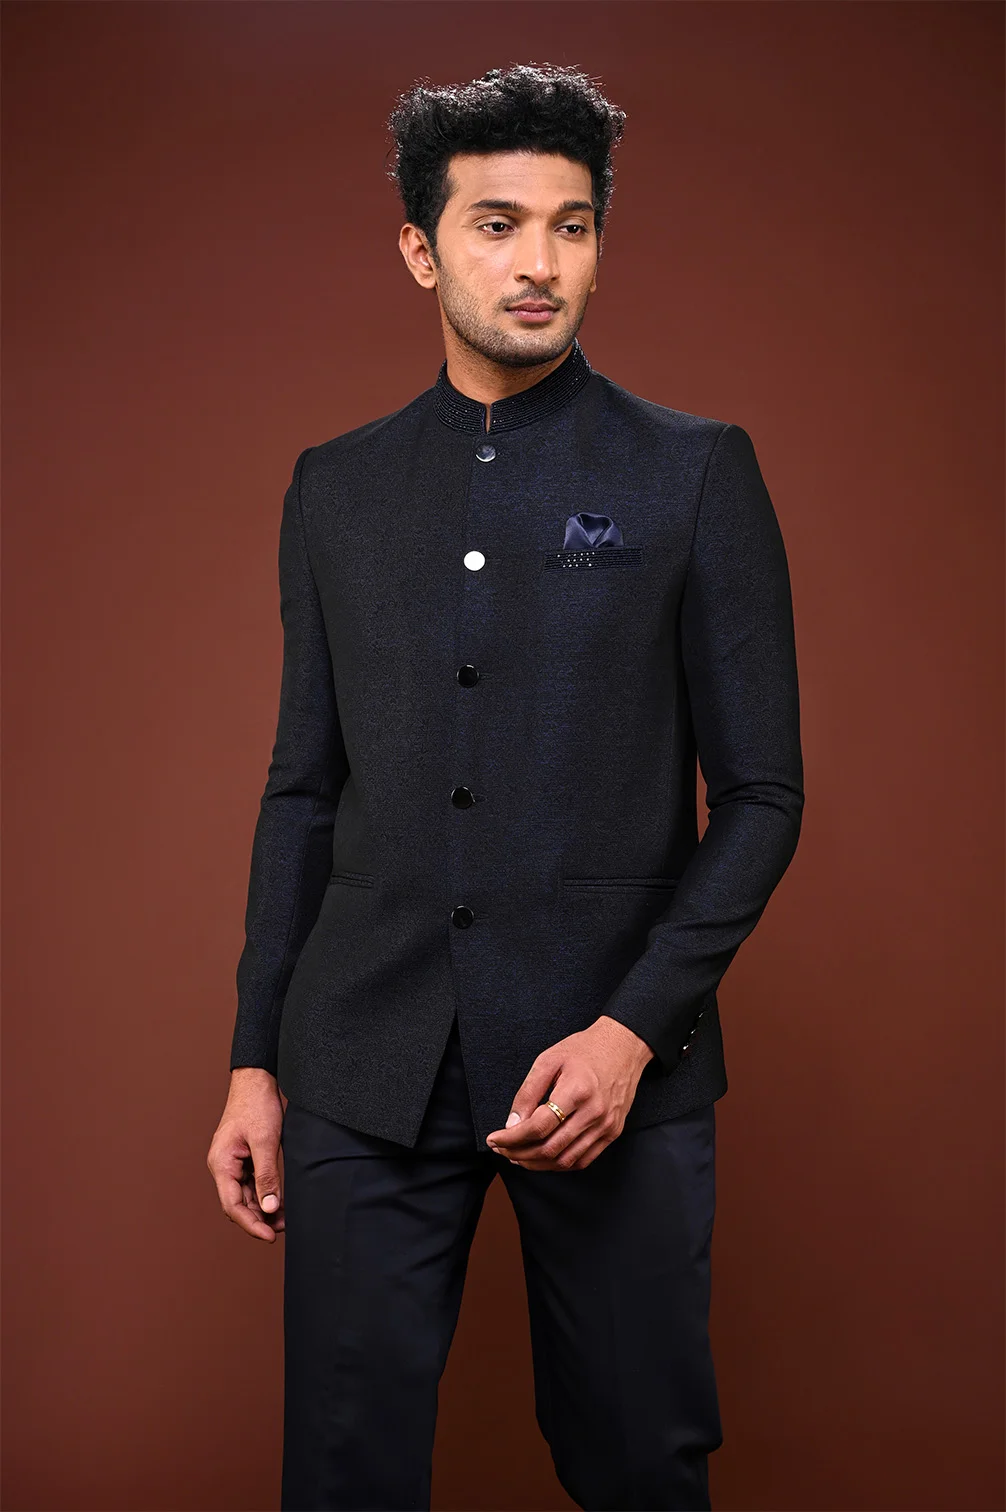 Men New Attractive Blue Jodhpuri Suit Wedding Party Wear Style Occasional  Jacket | eBay